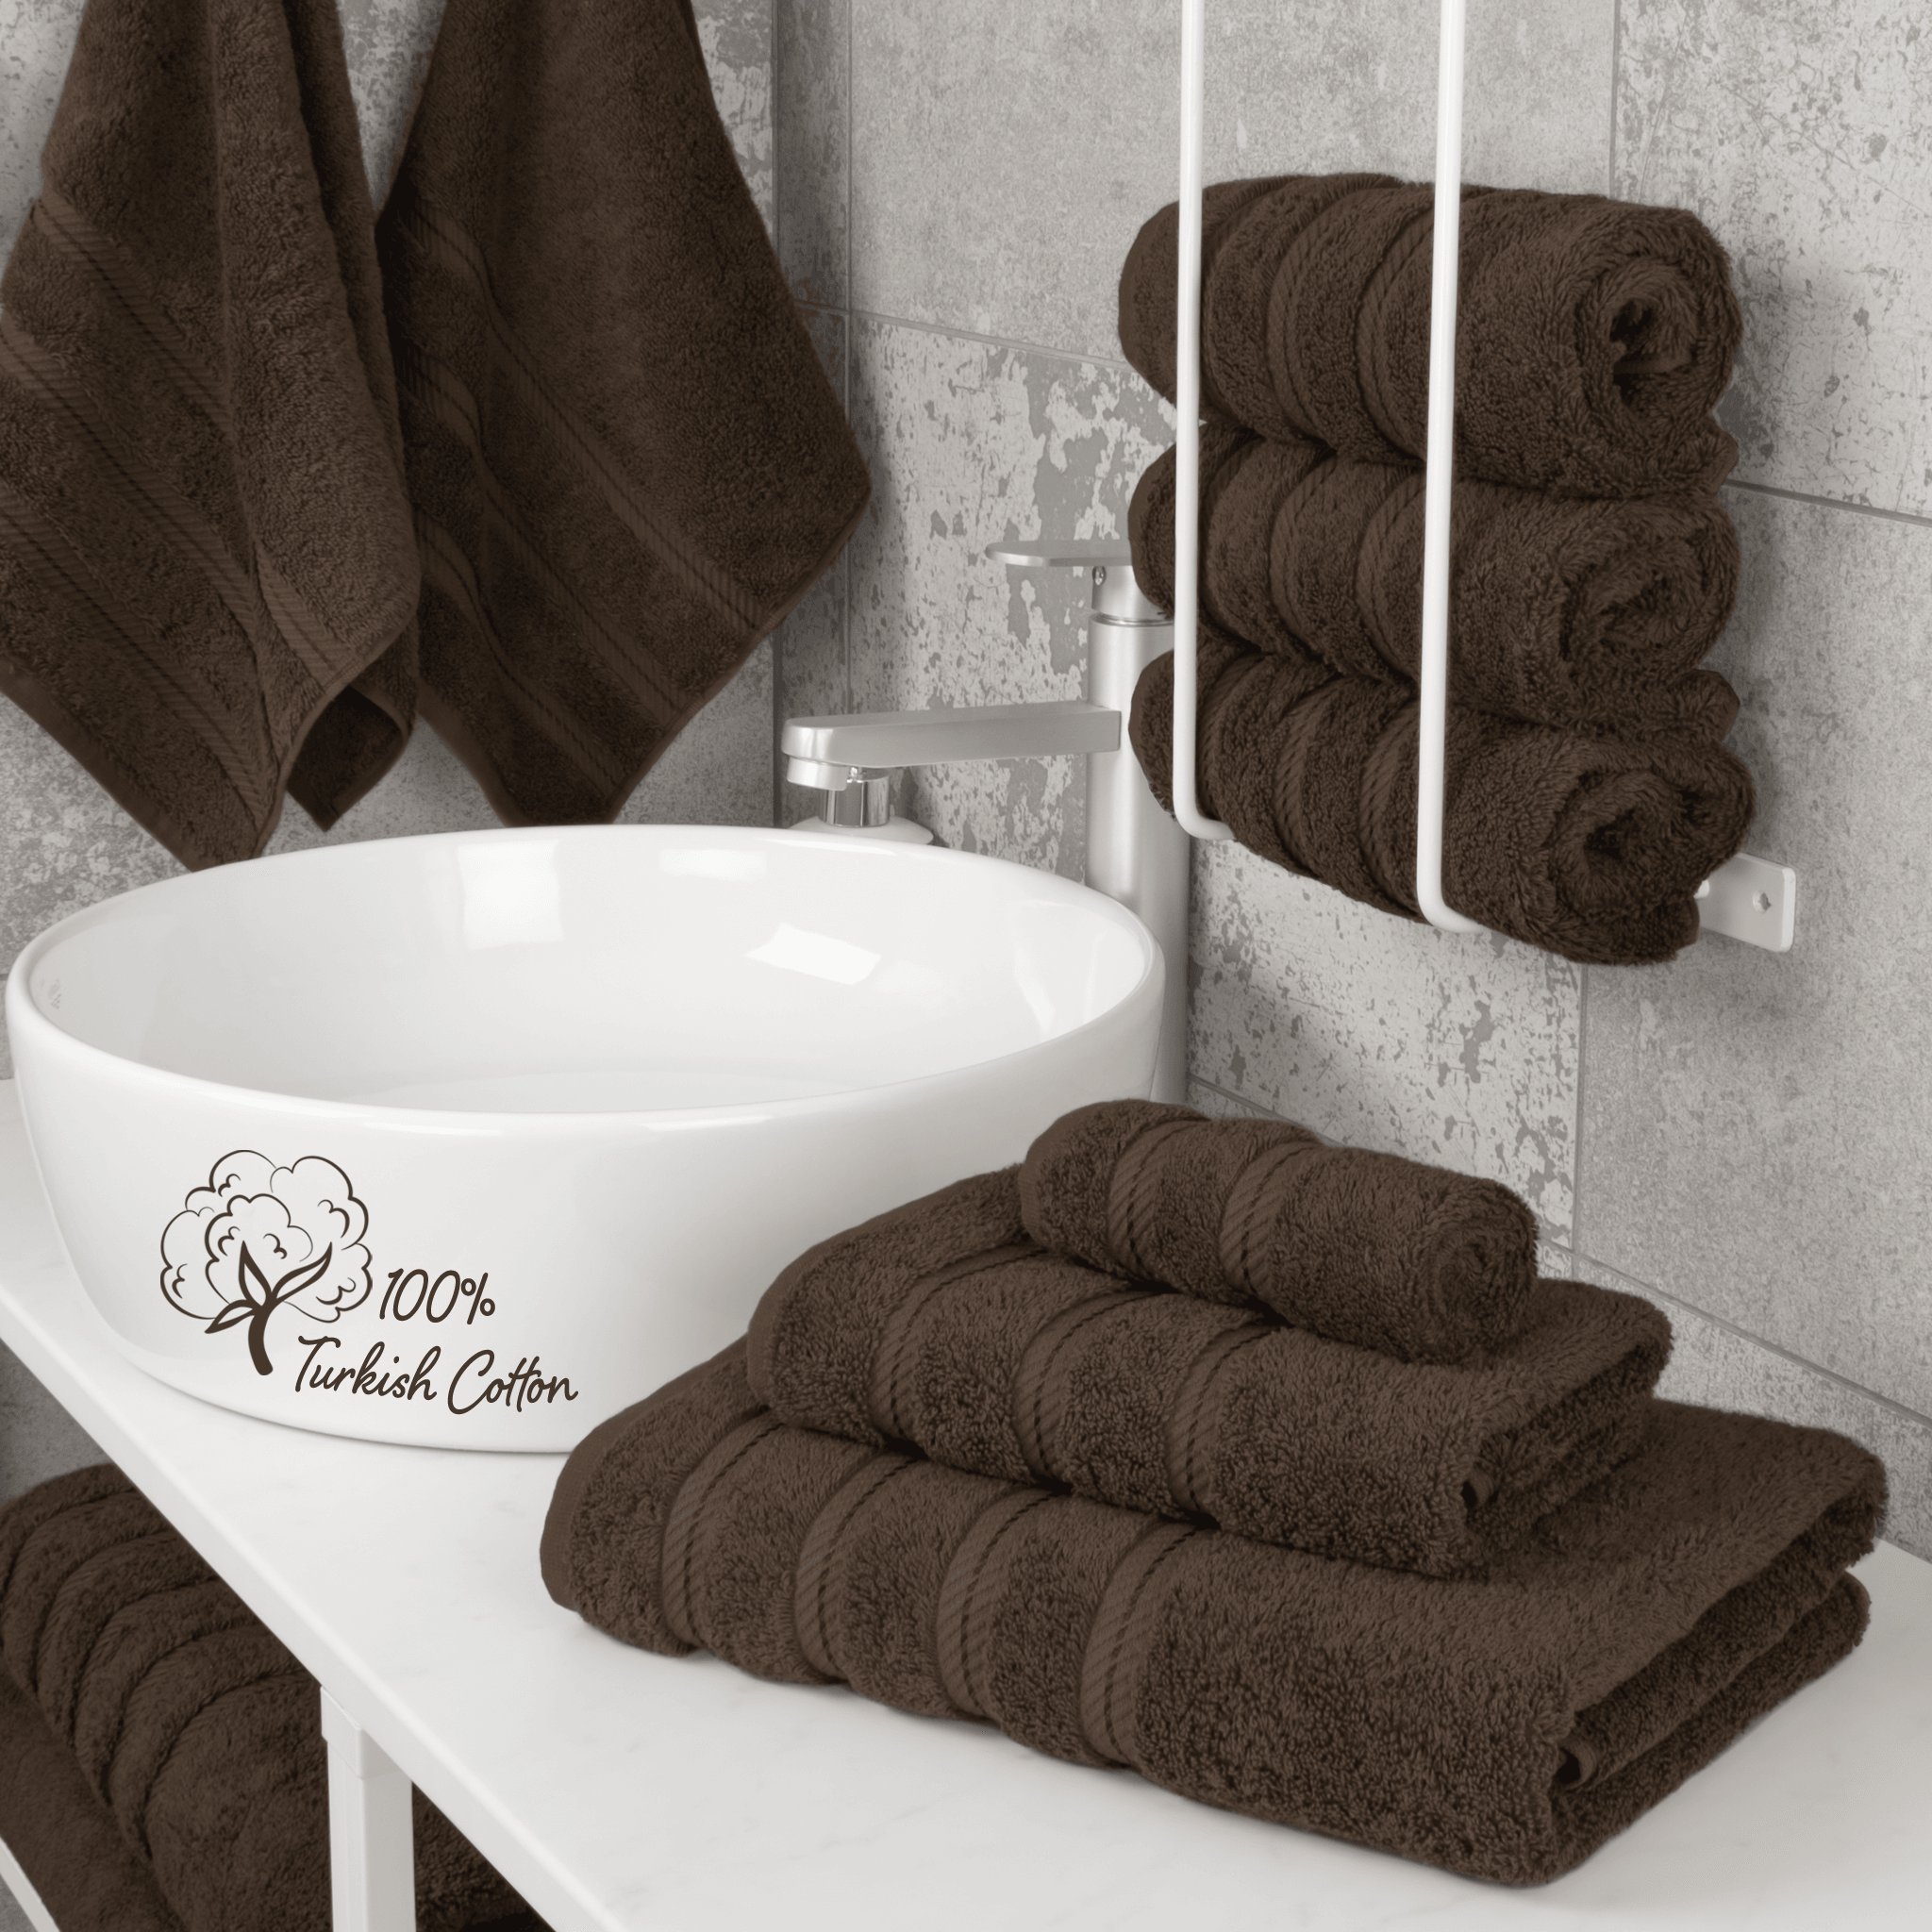 American Soft Linen - 3 Piece Turkish Cotton Towel Set - Chocolate-Brown - 2